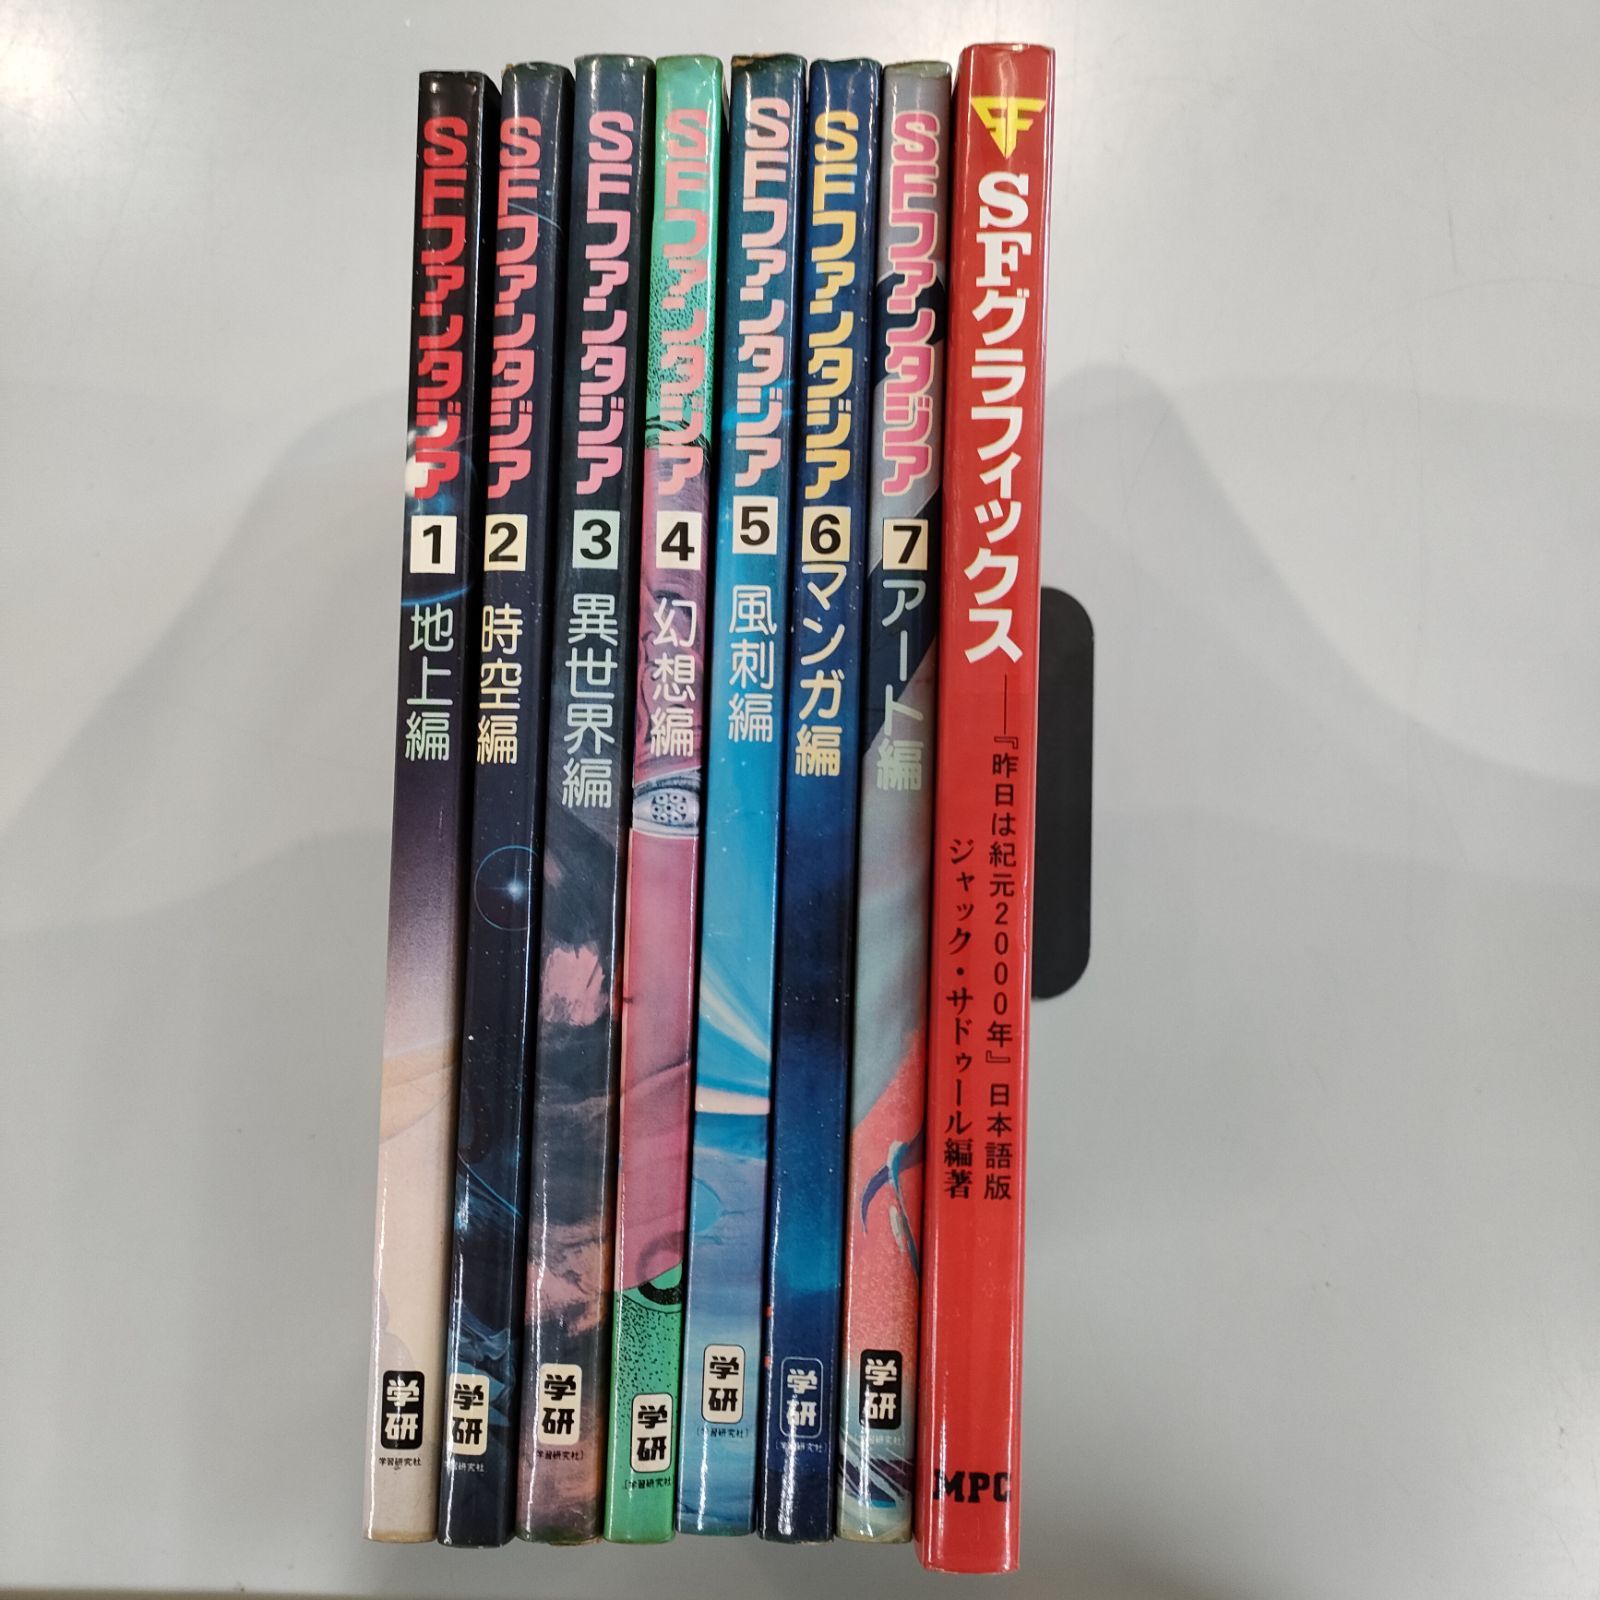 SF ファンタジア 1-7巻 SF グラフィックス 合計8冊 学研 - メルカリ